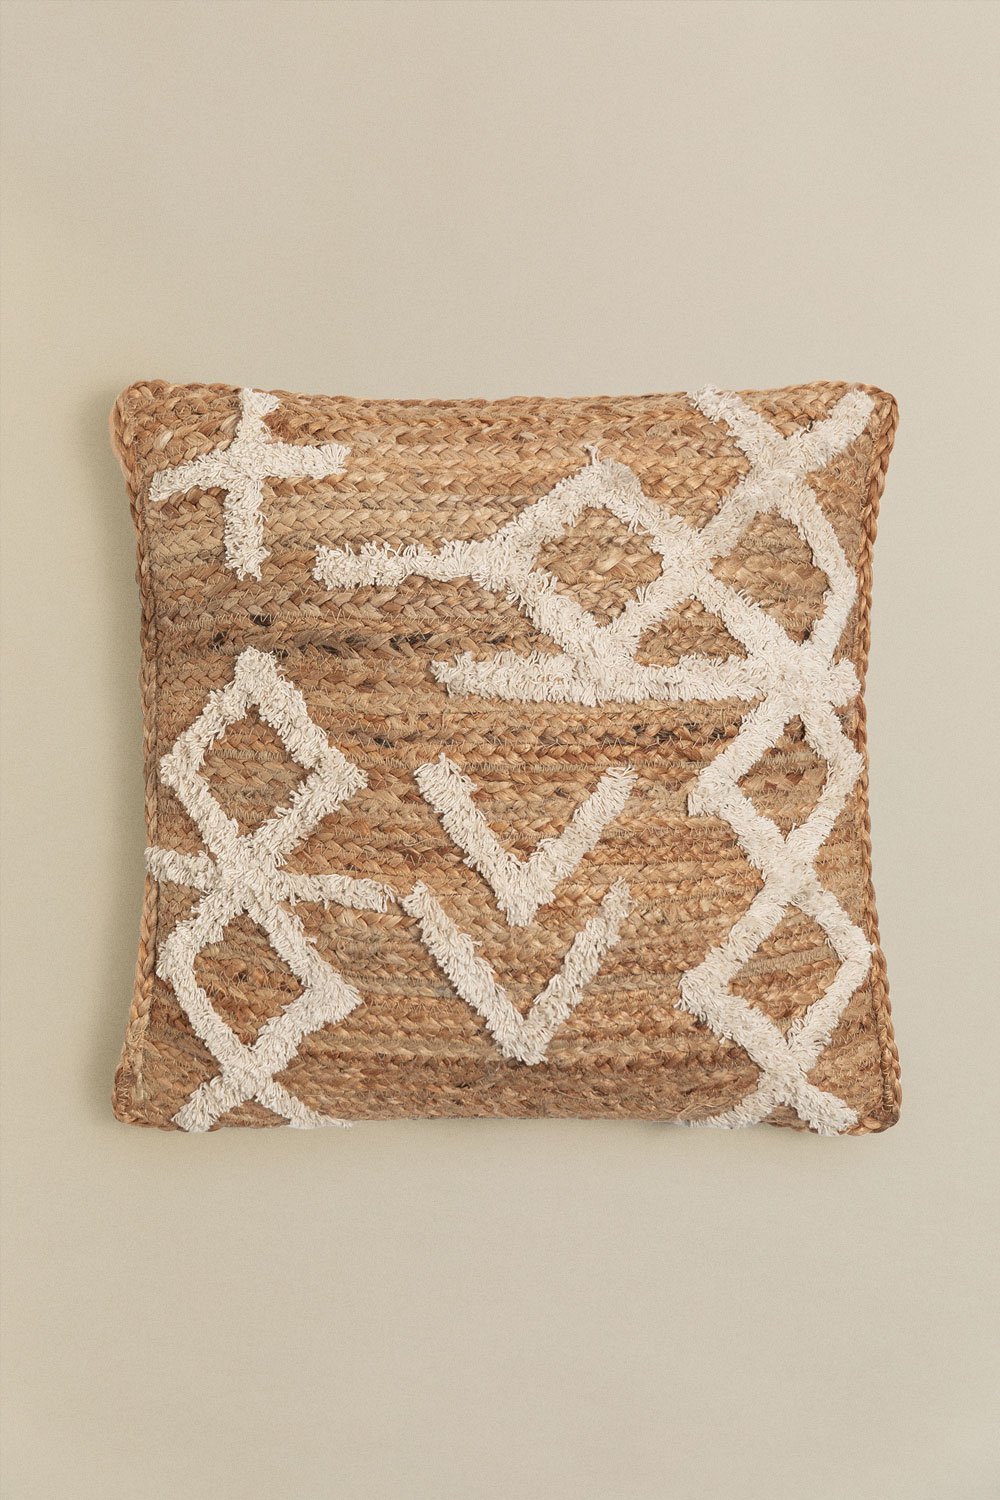 Square Jute & Cotton Cushion (45x45 cm) Bato, gallery image 1